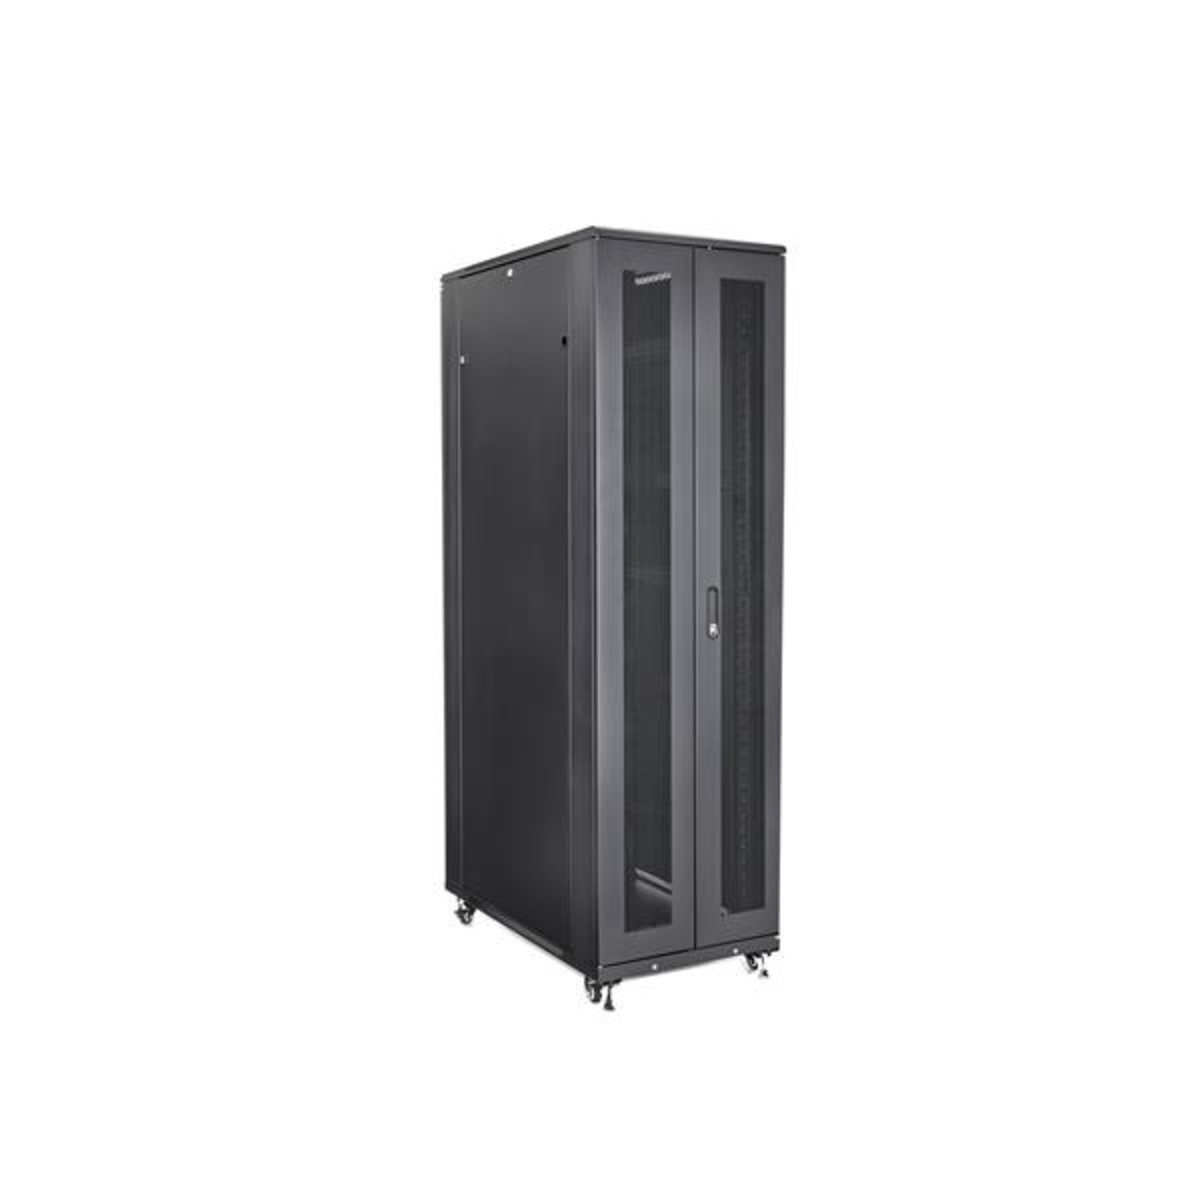 Server Rack Cabinet - 42U 36in Deep